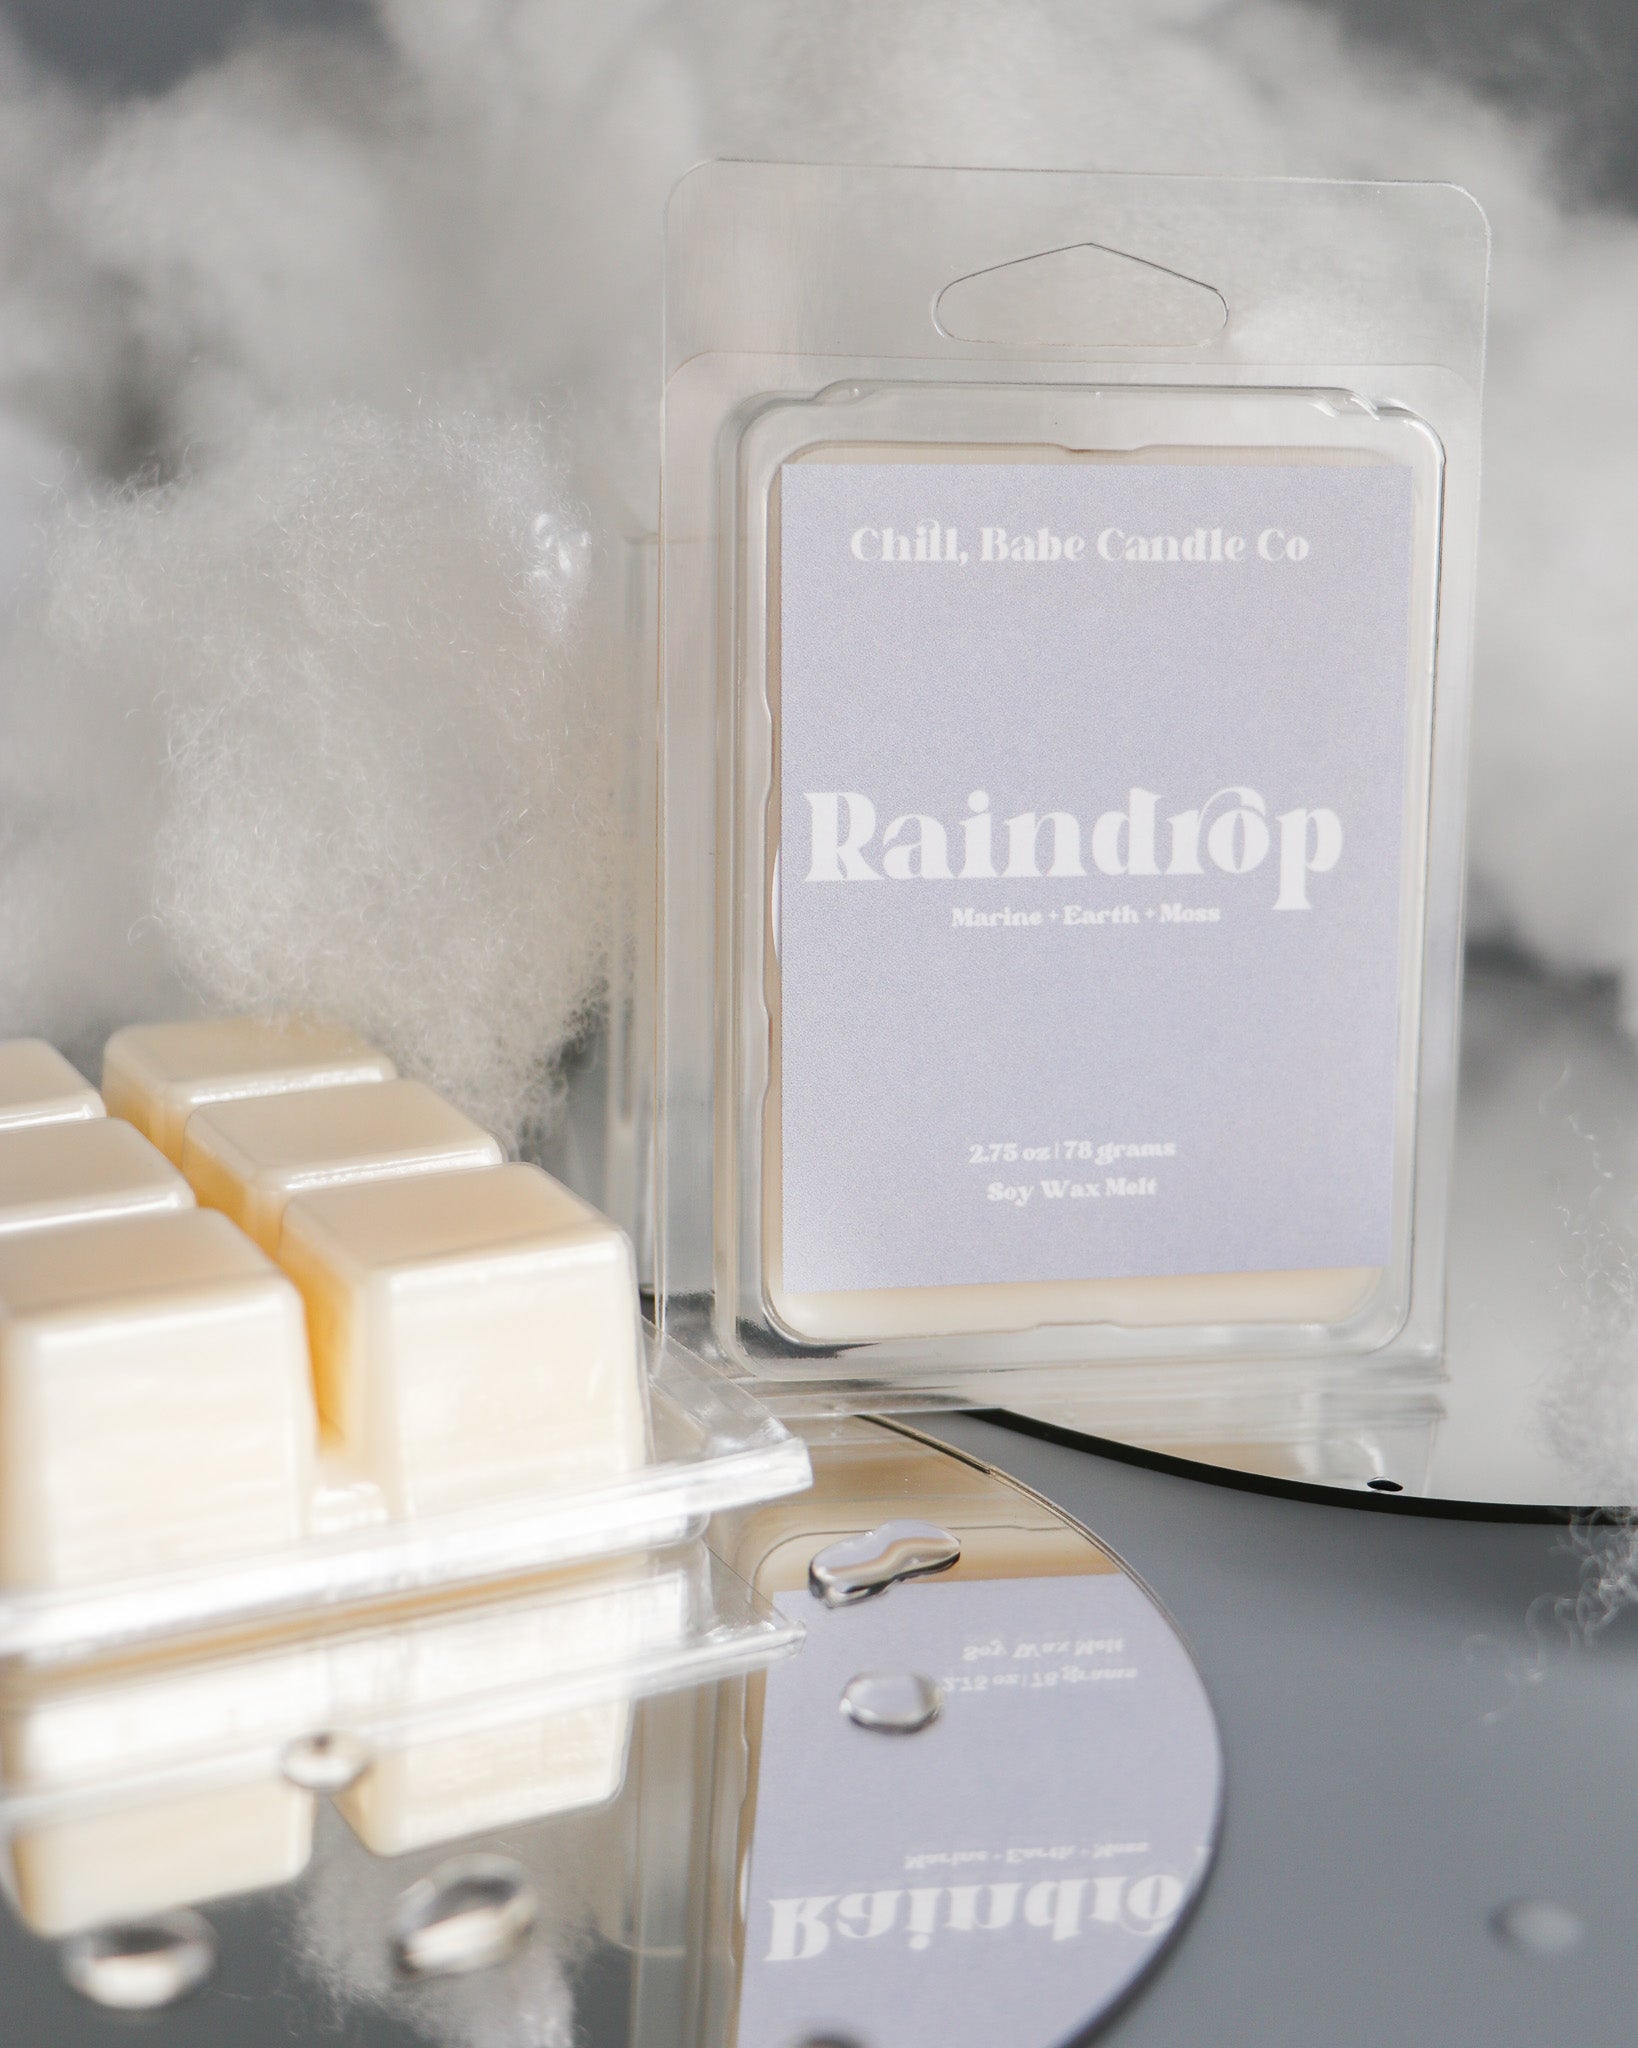 Raindrop Wax Melt | Ozone + Earth + Moss